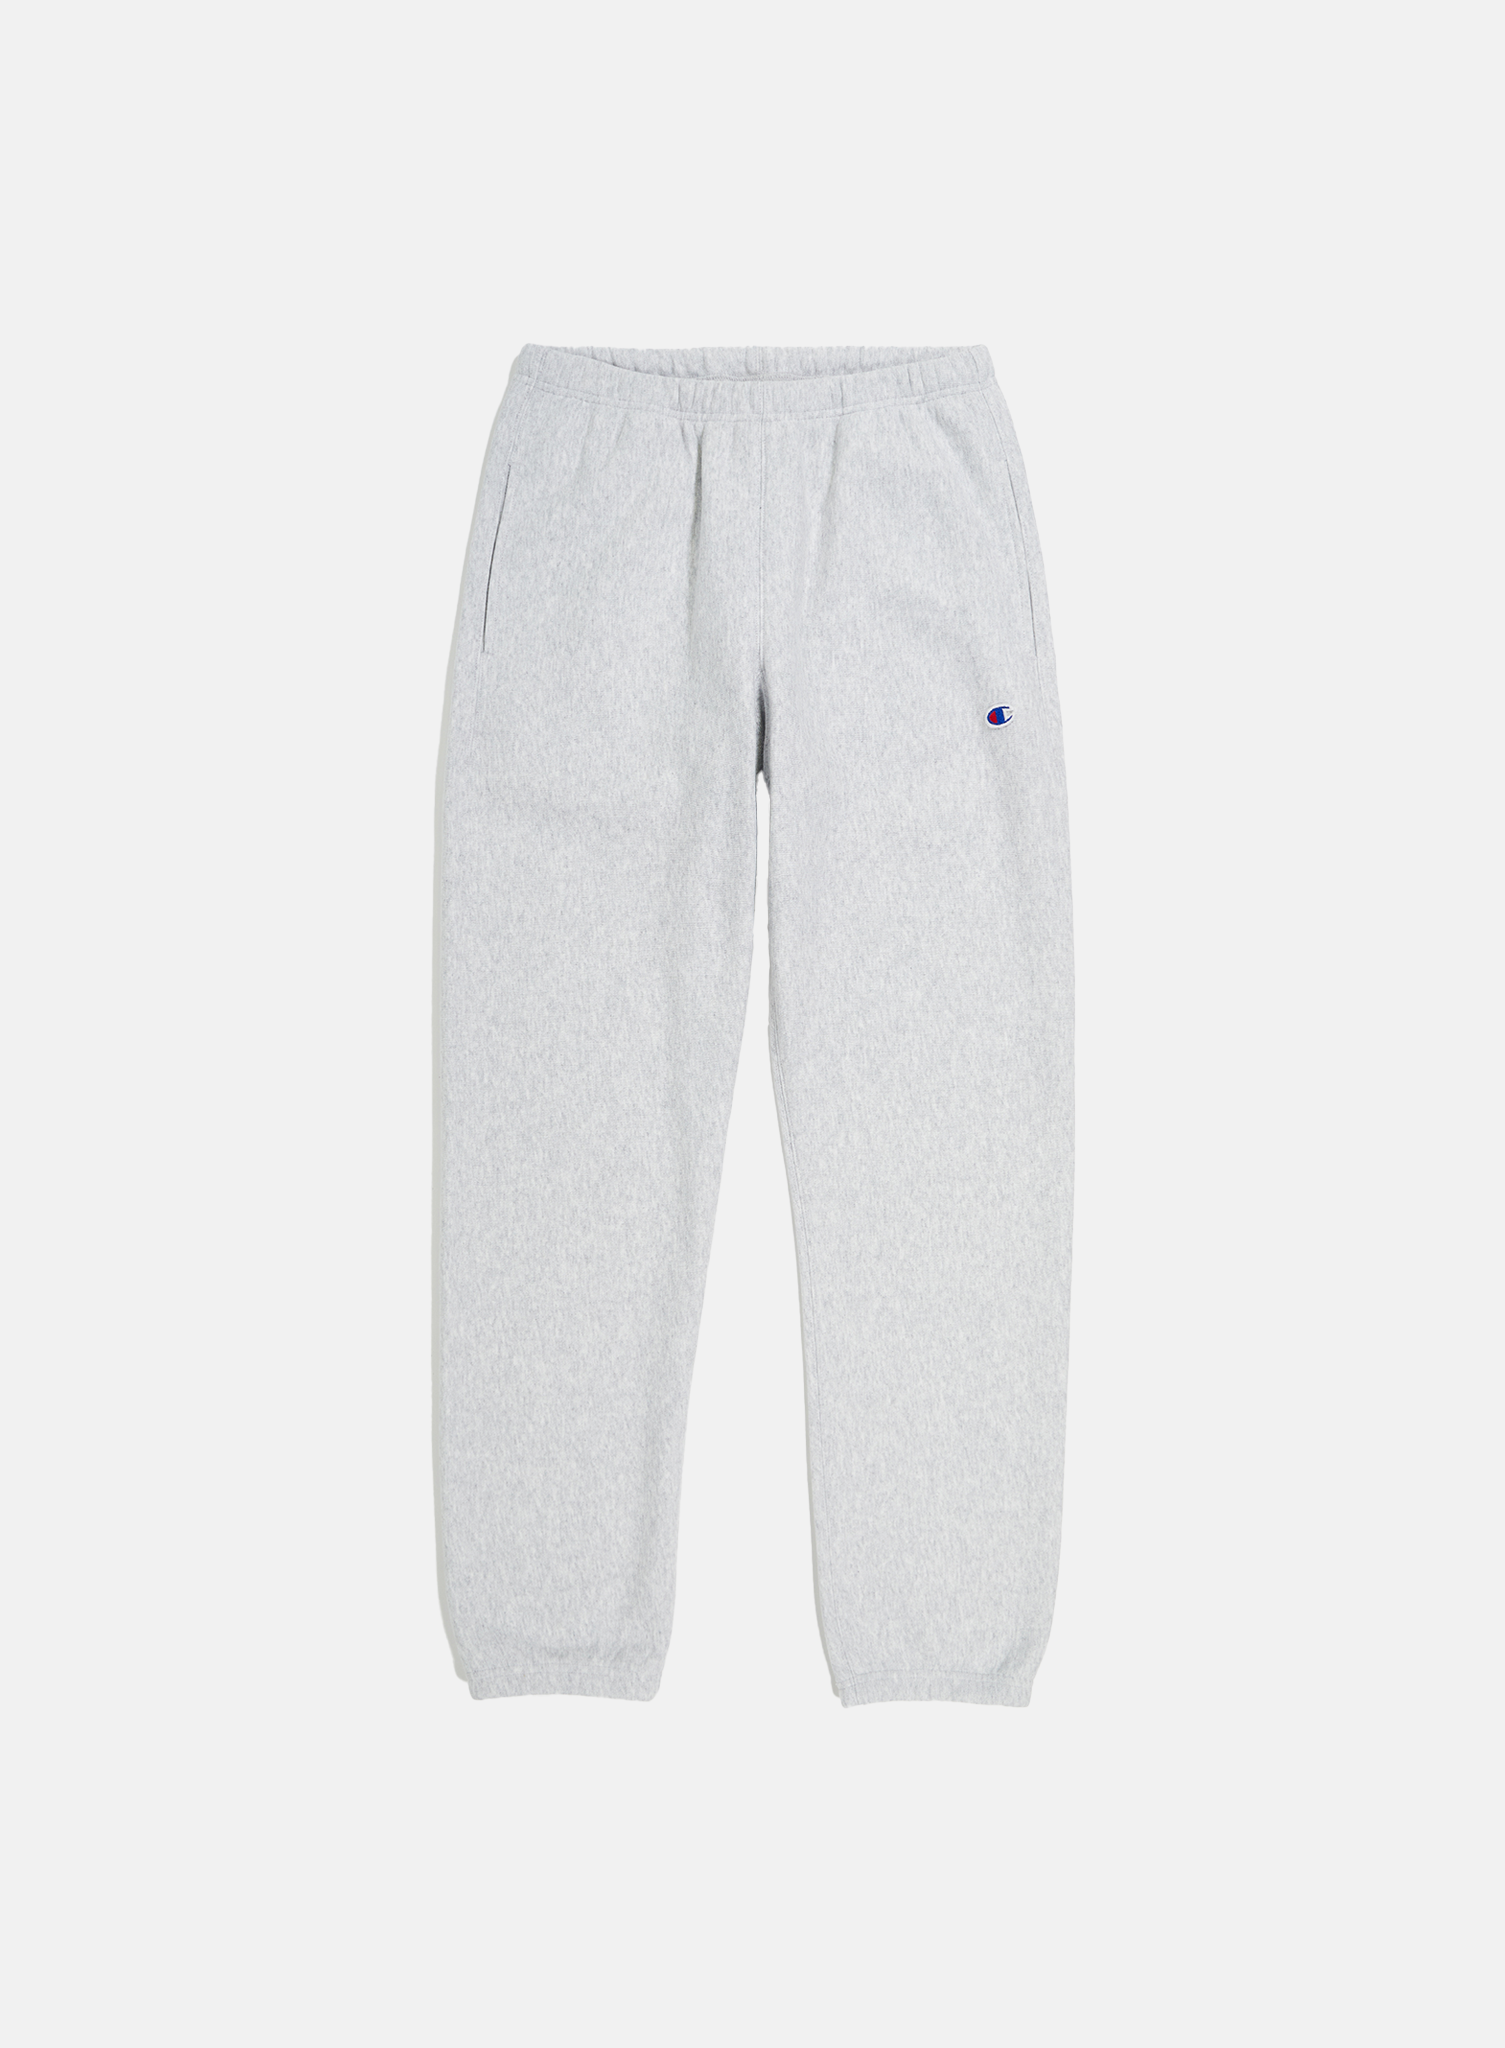 Champion Reverse Weave Elastic Cuff Pant Grey - Hympala Store 